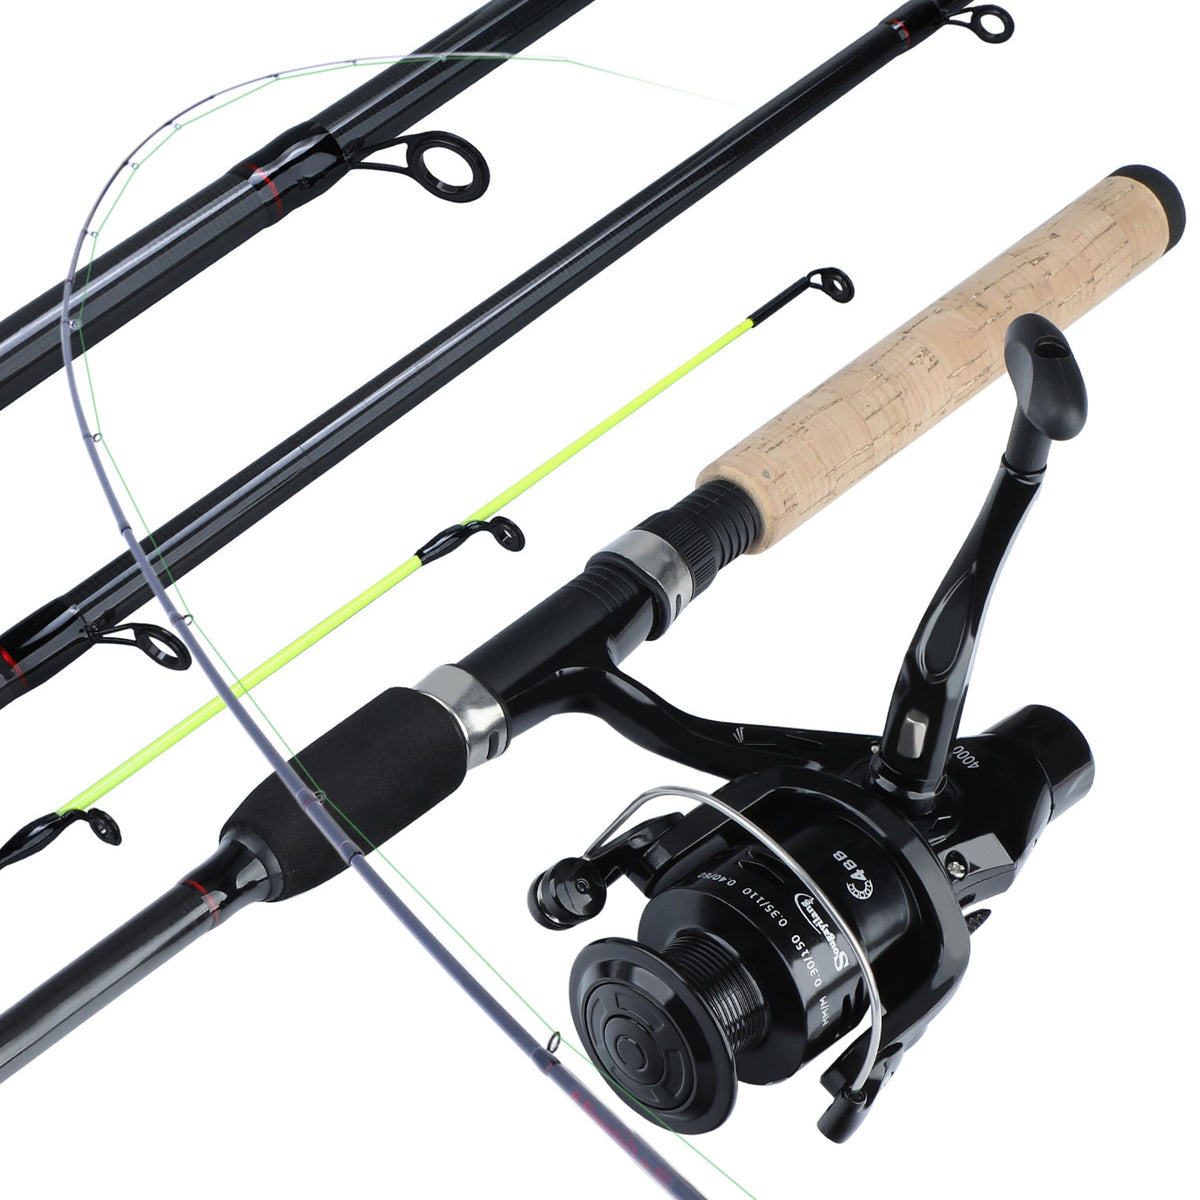 Sougayilang Carp Fishing Rod Reel Combo 3M Spinning Feeder Fishing Rod with  3 Tips L M H Power and 4BB 5.2:1 Carp Fishing Reels